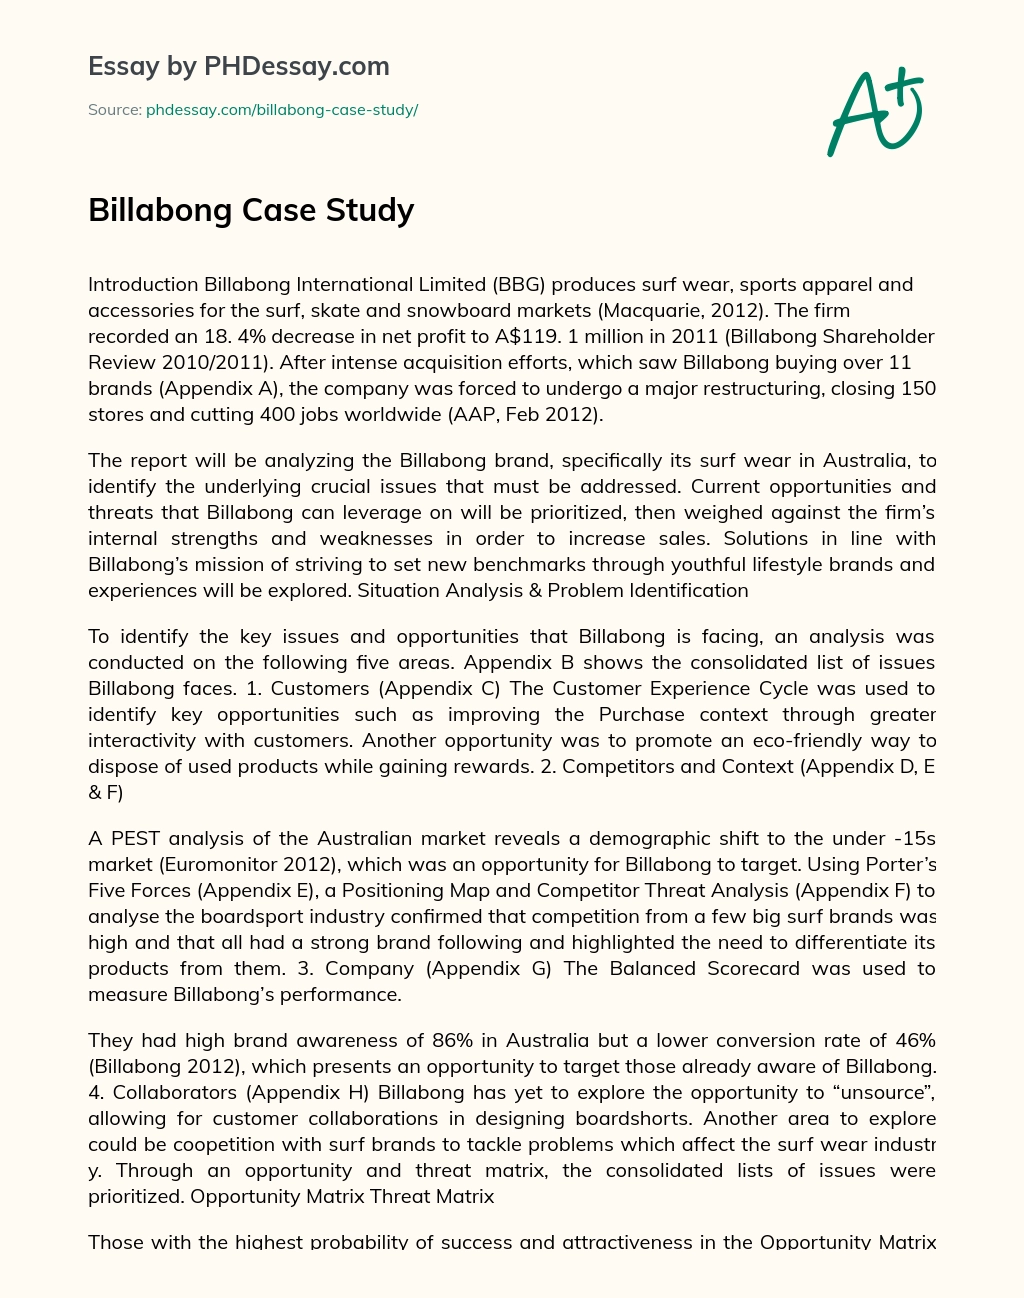 Billabong Case Study essay